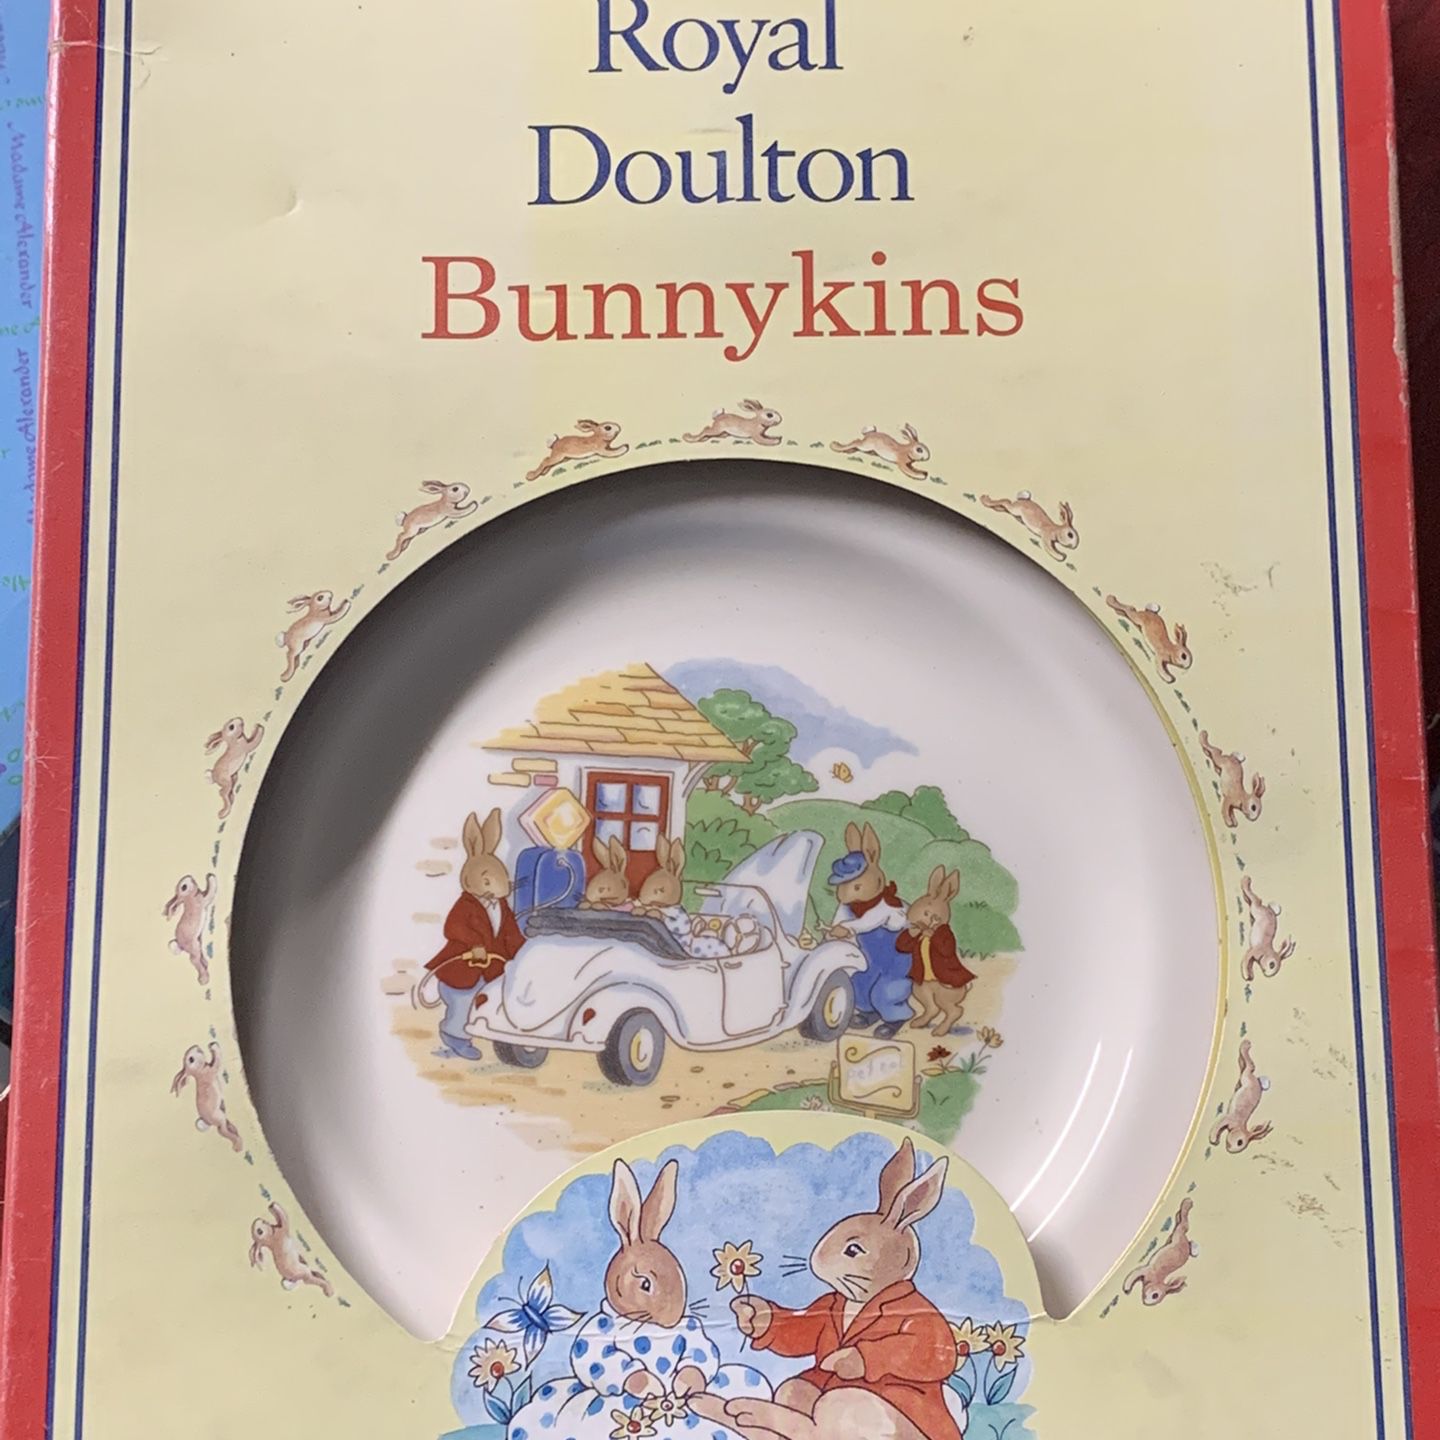 Royal Doulton Bunnykins 3 Piece Plate Set